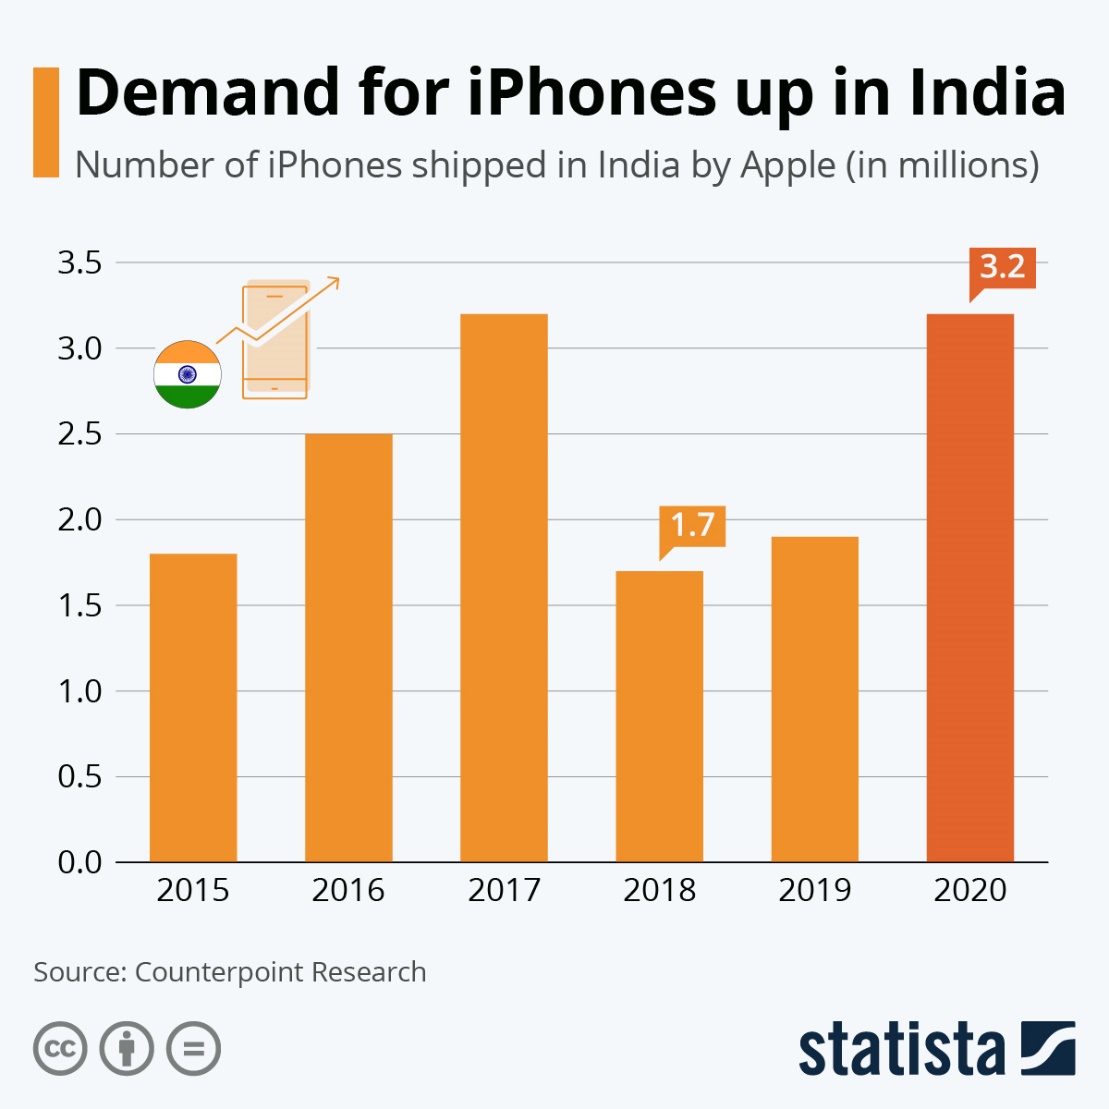 Demand for iPhones in India 